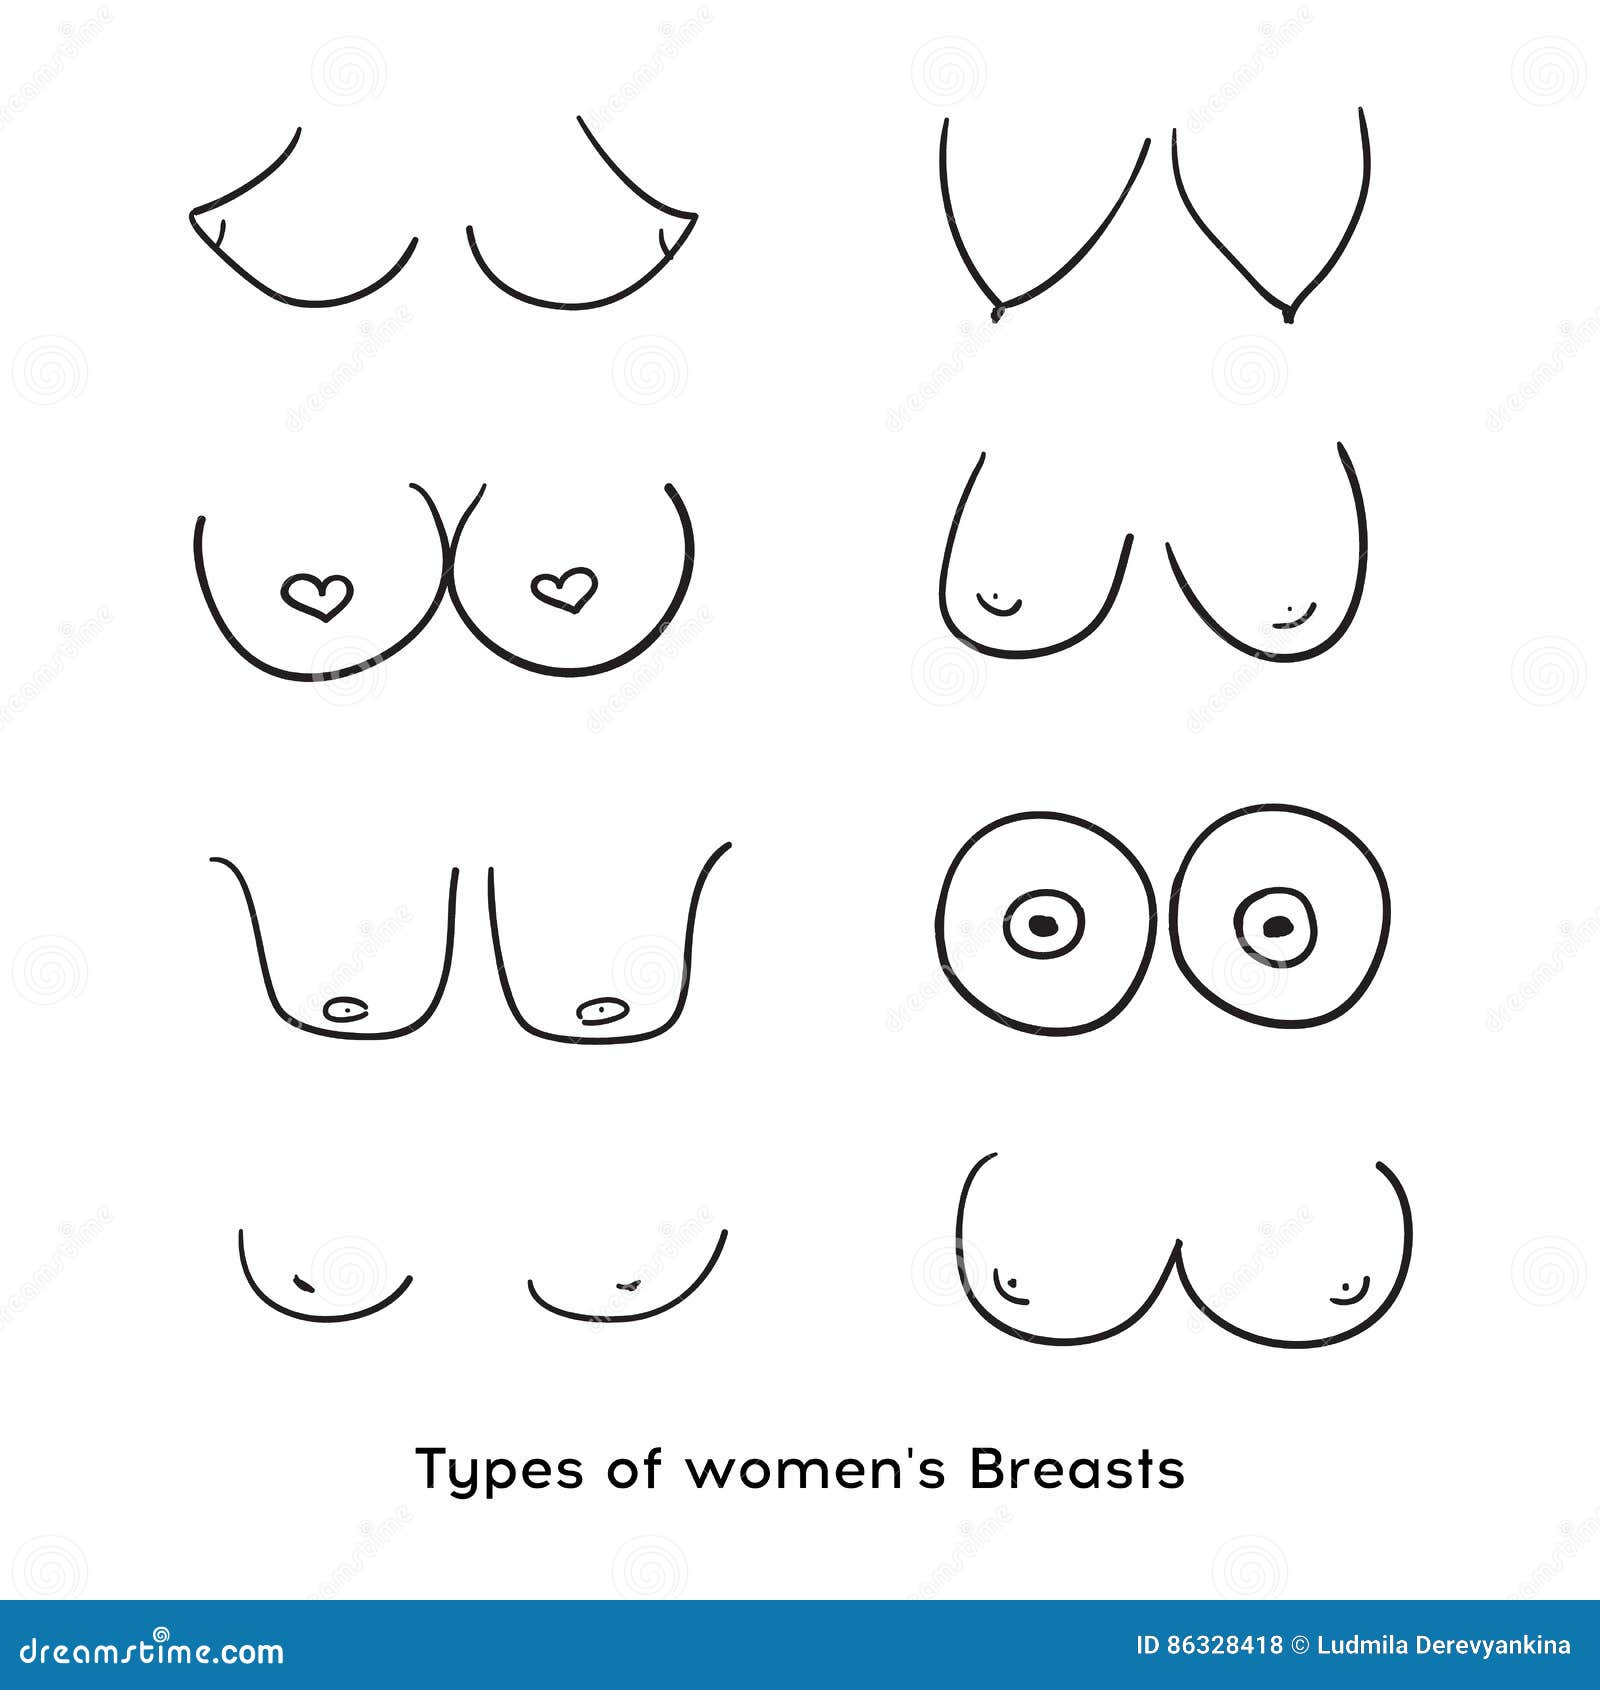 https://thumbs.dreamstime.com/z/types-women-s-breasts-women-s-breast-icon-breast-icon-vector-illustration-86328418.jpg